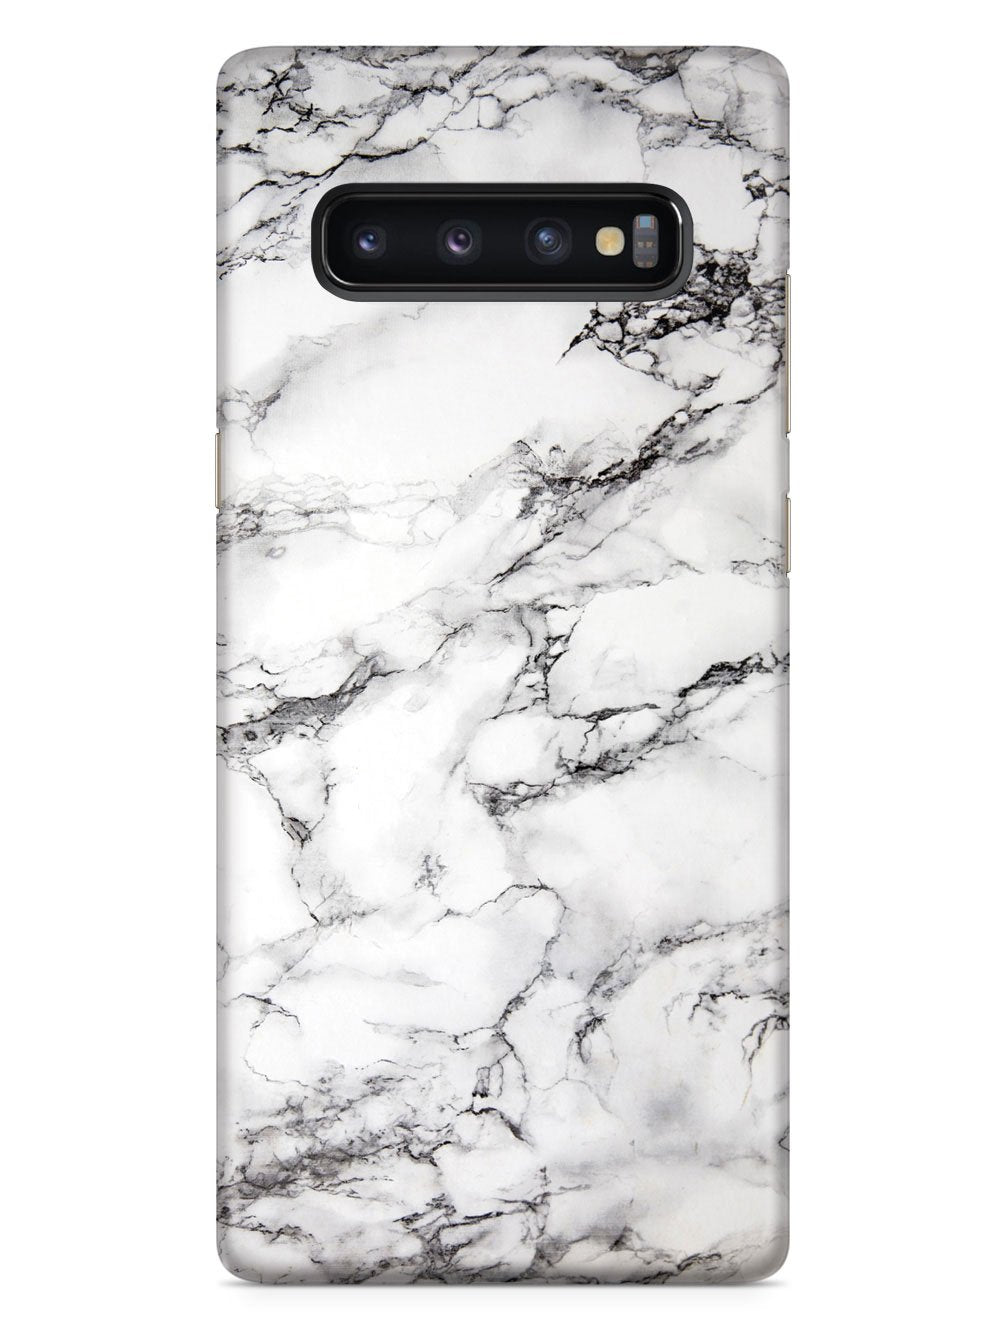 Textured Marble - Black & White Case